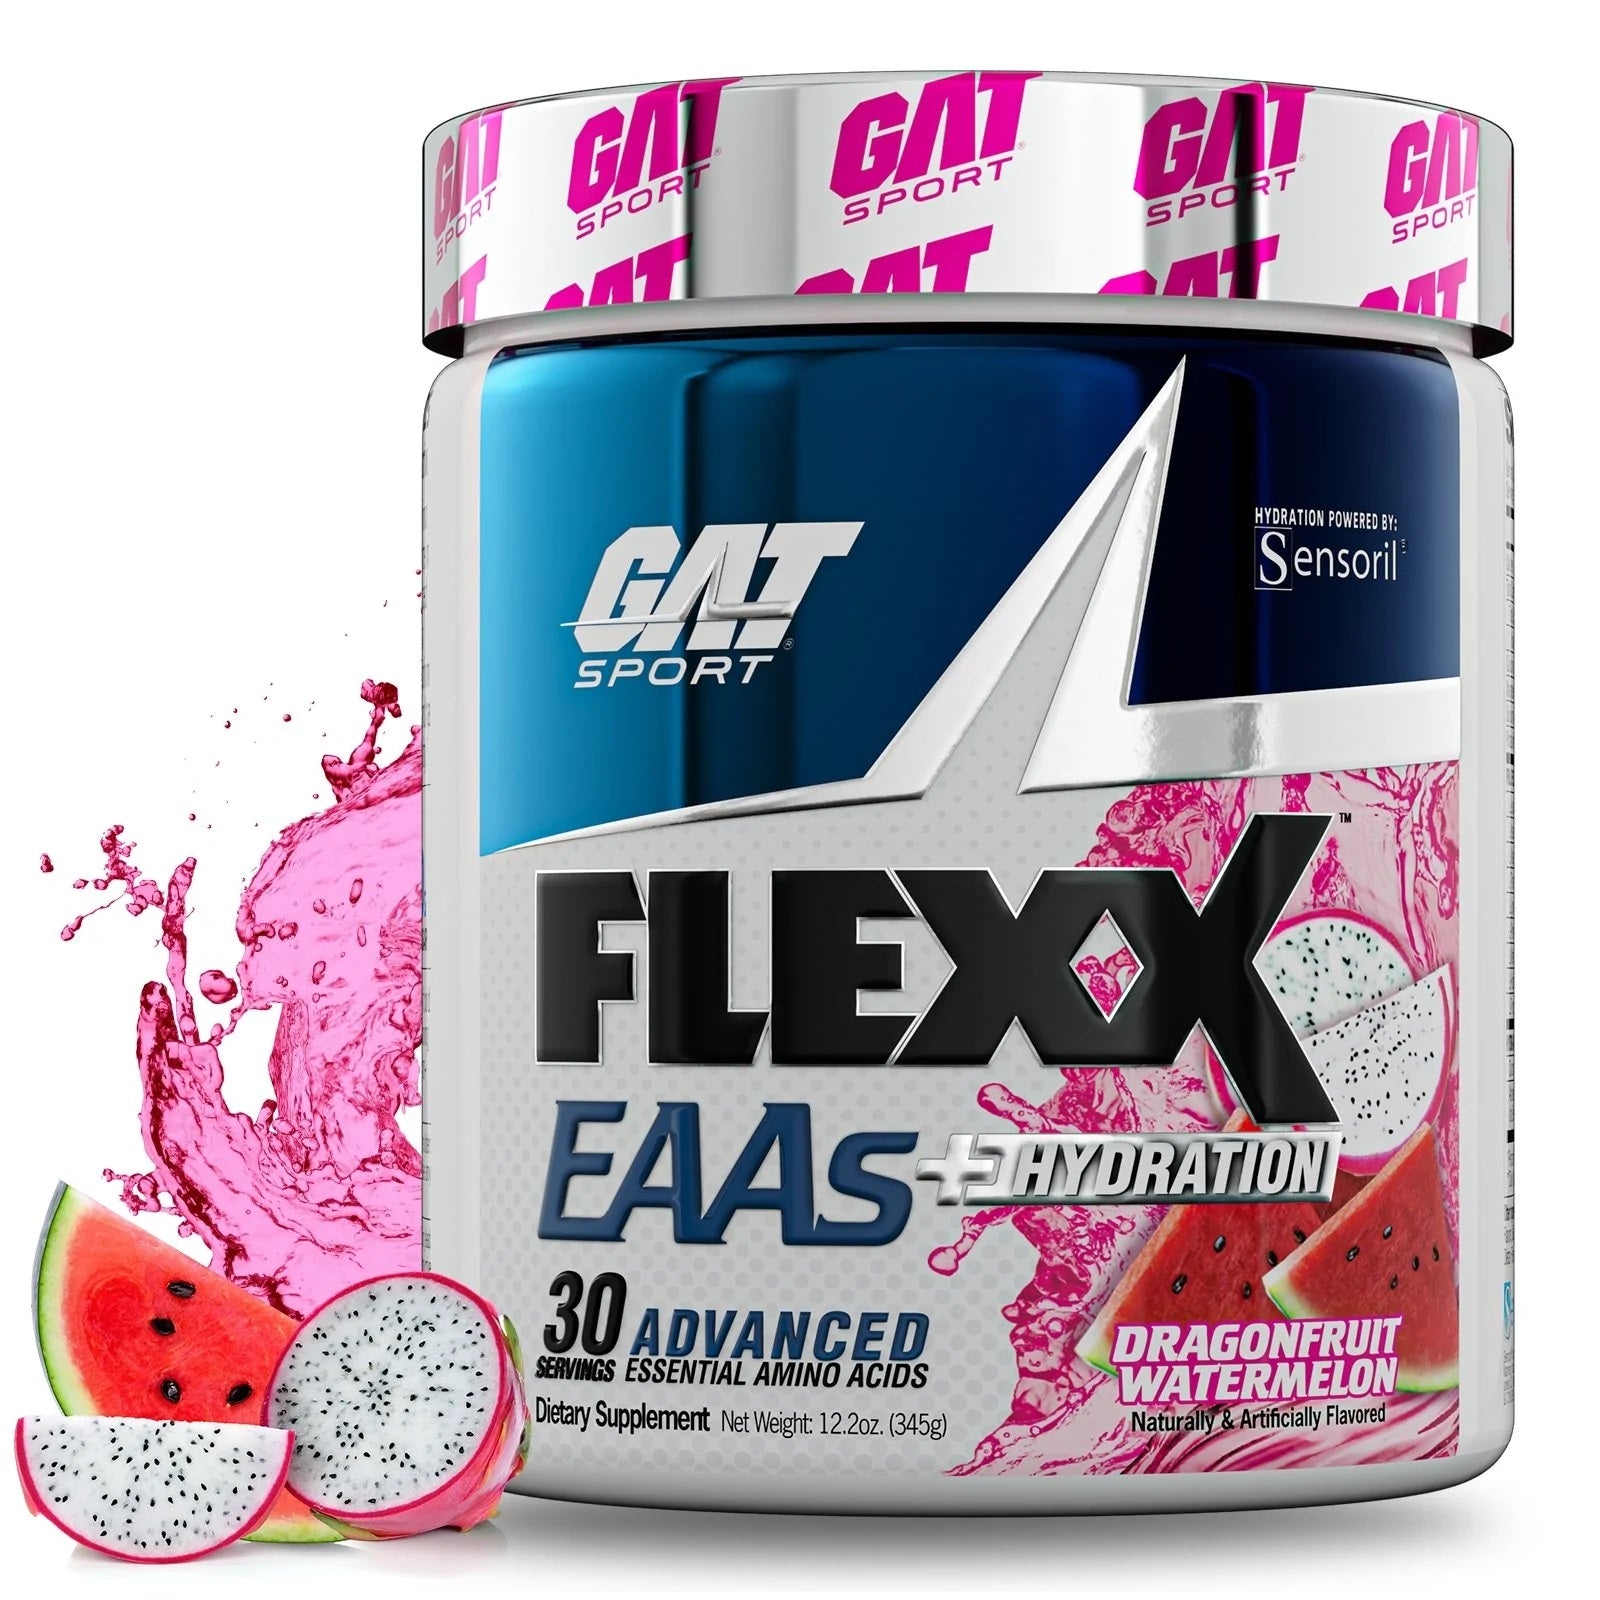 GAT Sport FLEXX EAAs+ Hydration watermelon